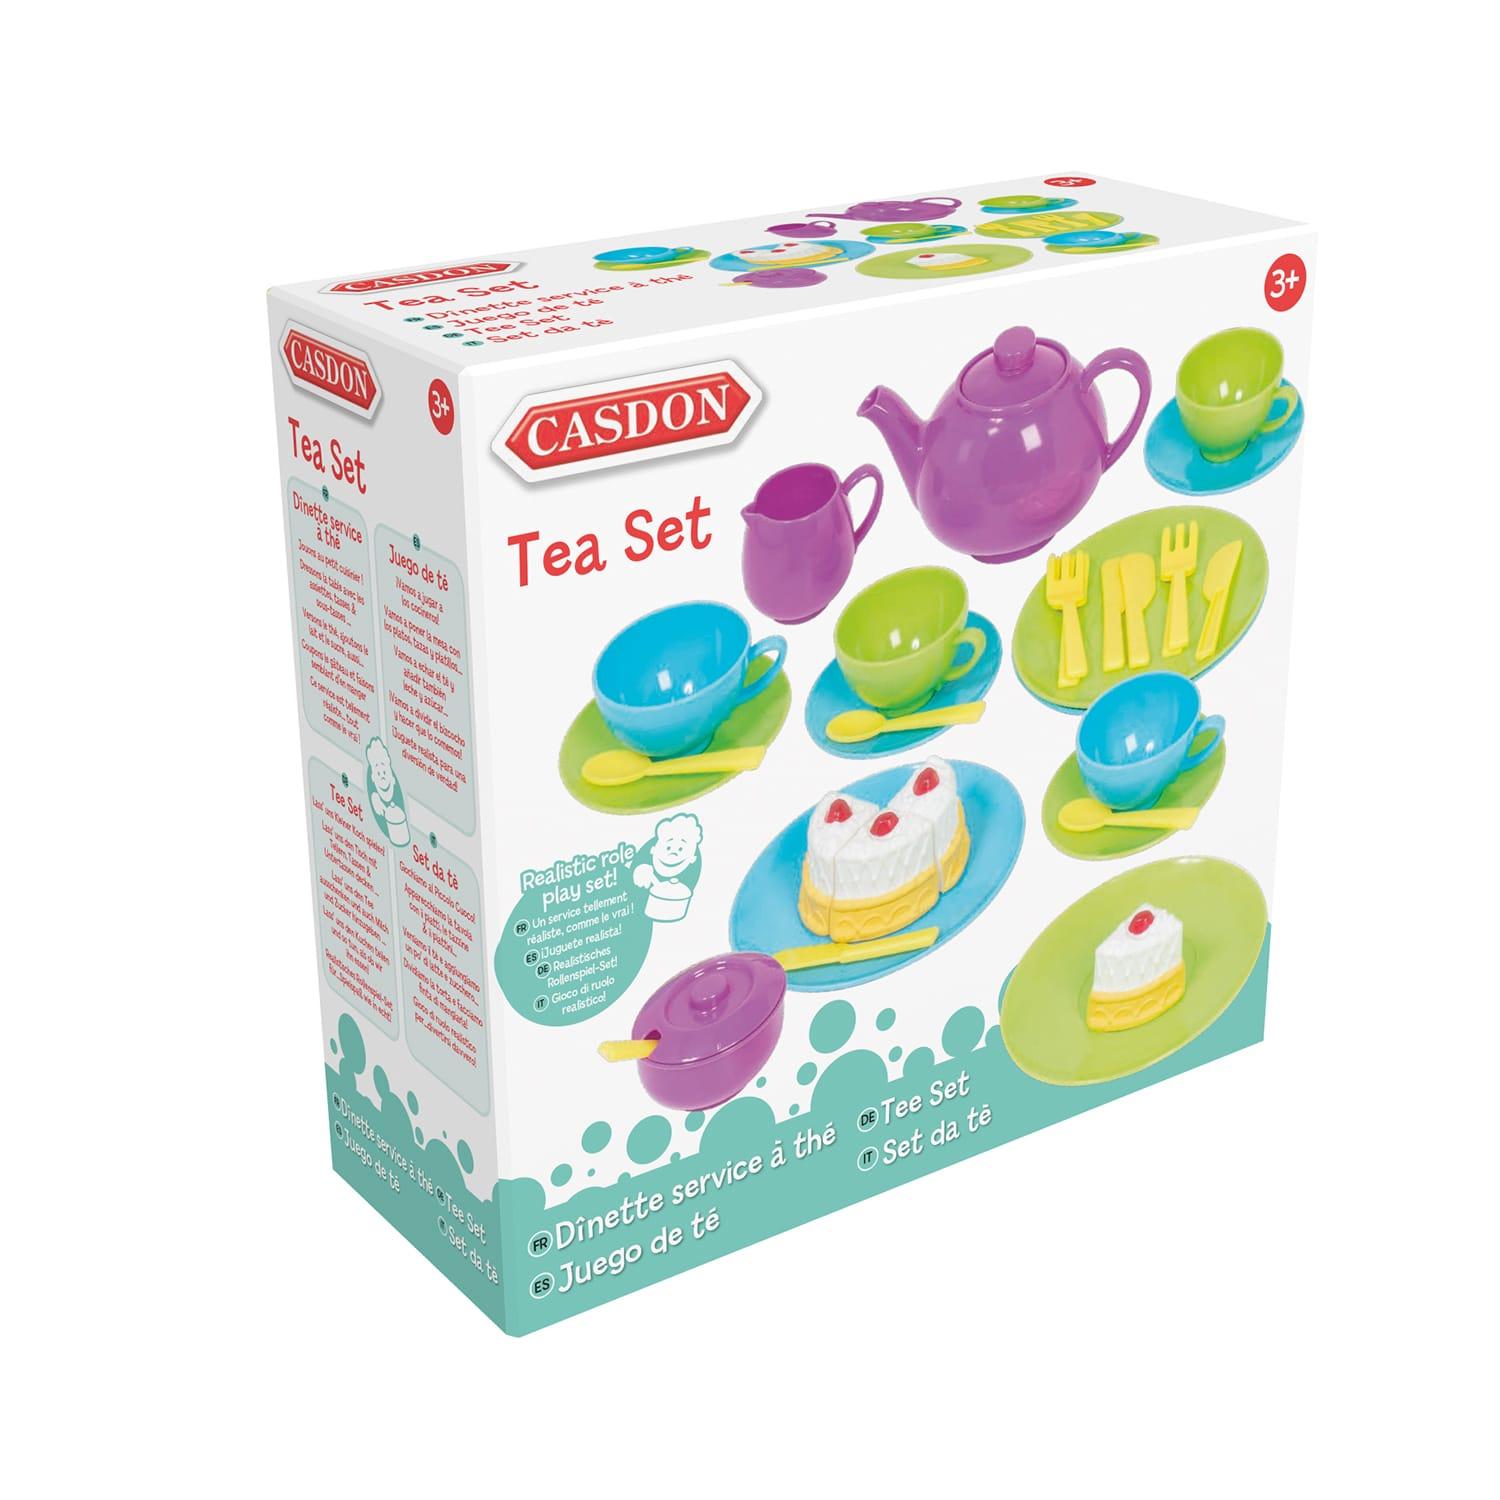 Casdon Childrens Kitchen Little Cook Teaset Tea Set Playset Toy 